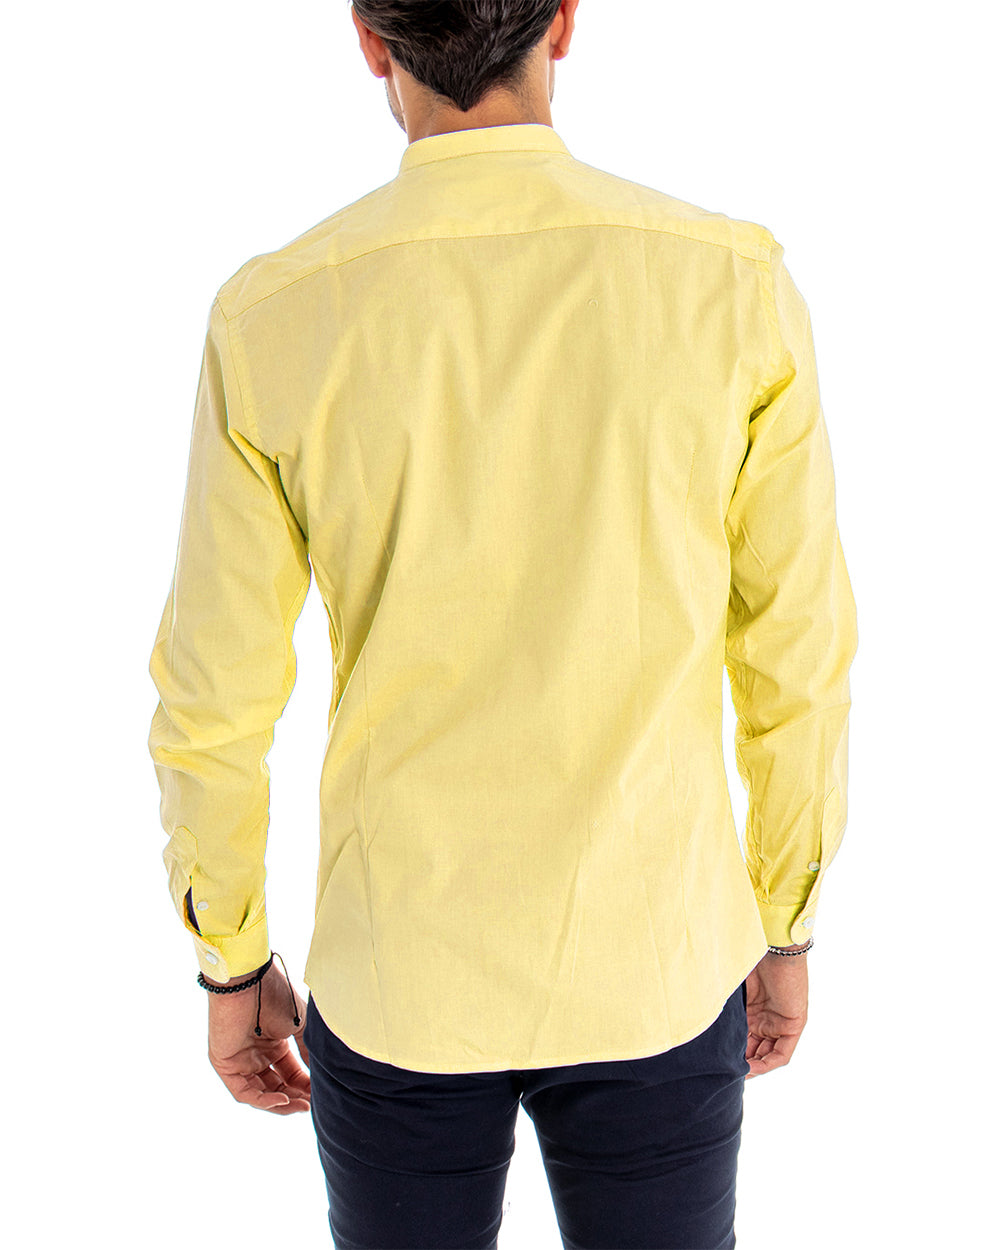 Men's Mandarin Collar Shirt Long Sleeve Solid Color Slim Fit Basic Light Gray GIOSAL-C2093A